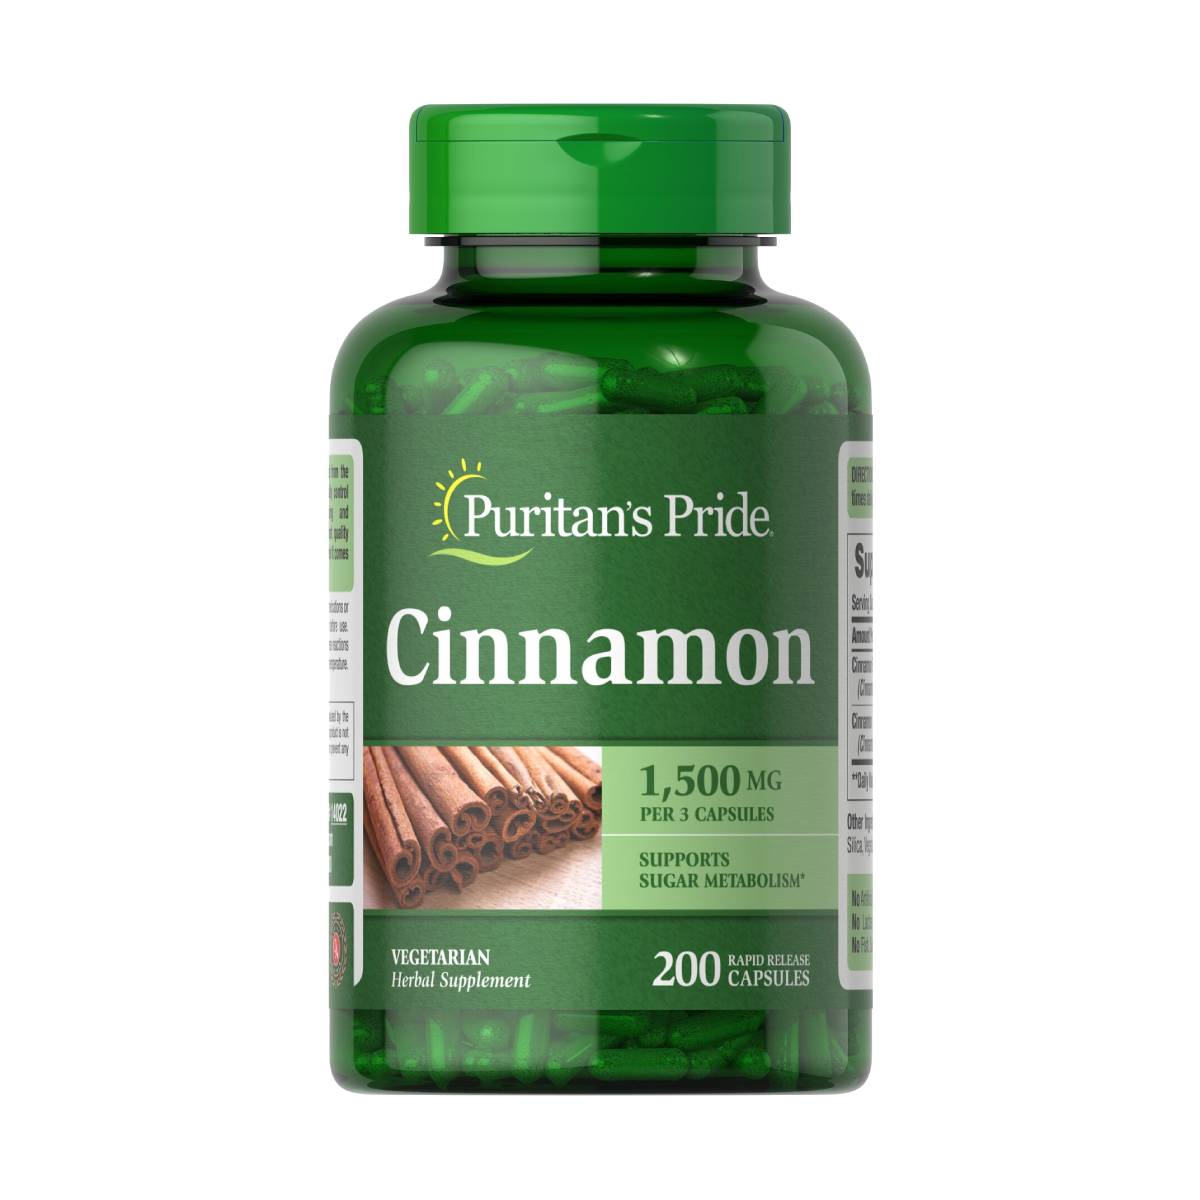 Puritan's Pride, Cinnamon 500 mg